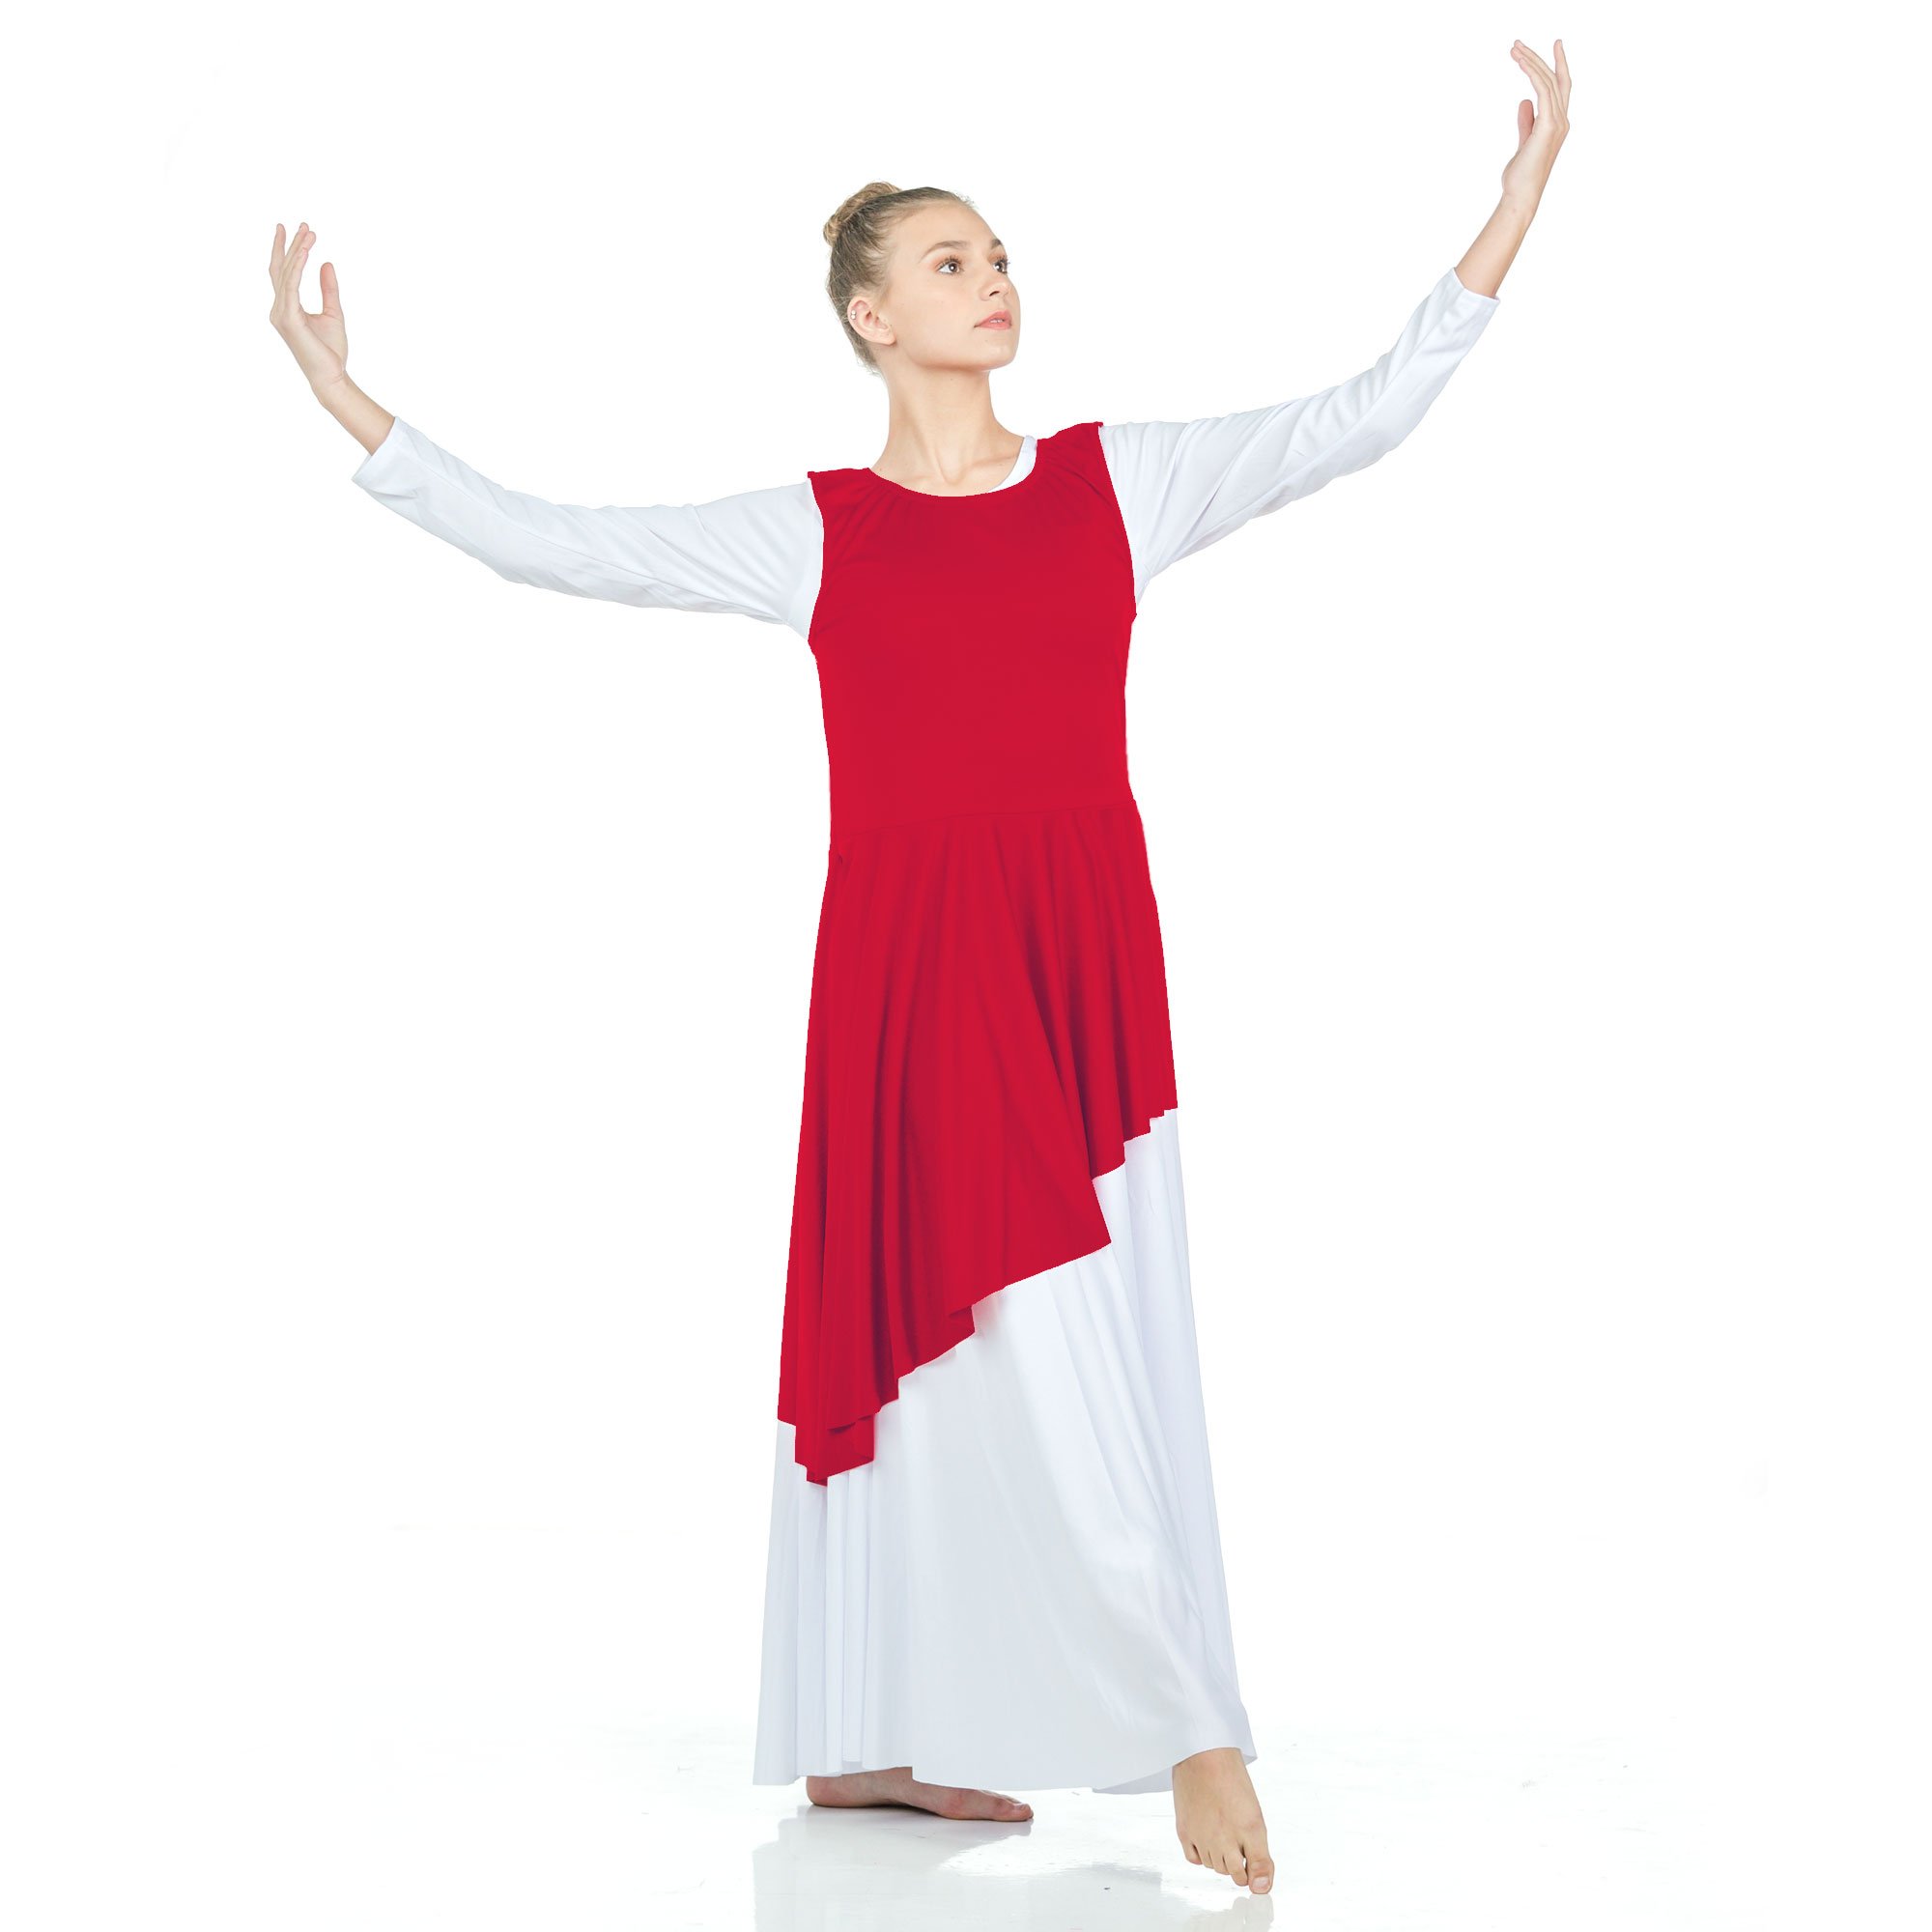 Danzcue Asymmetrical Praise Dance Tunic with Side Slits